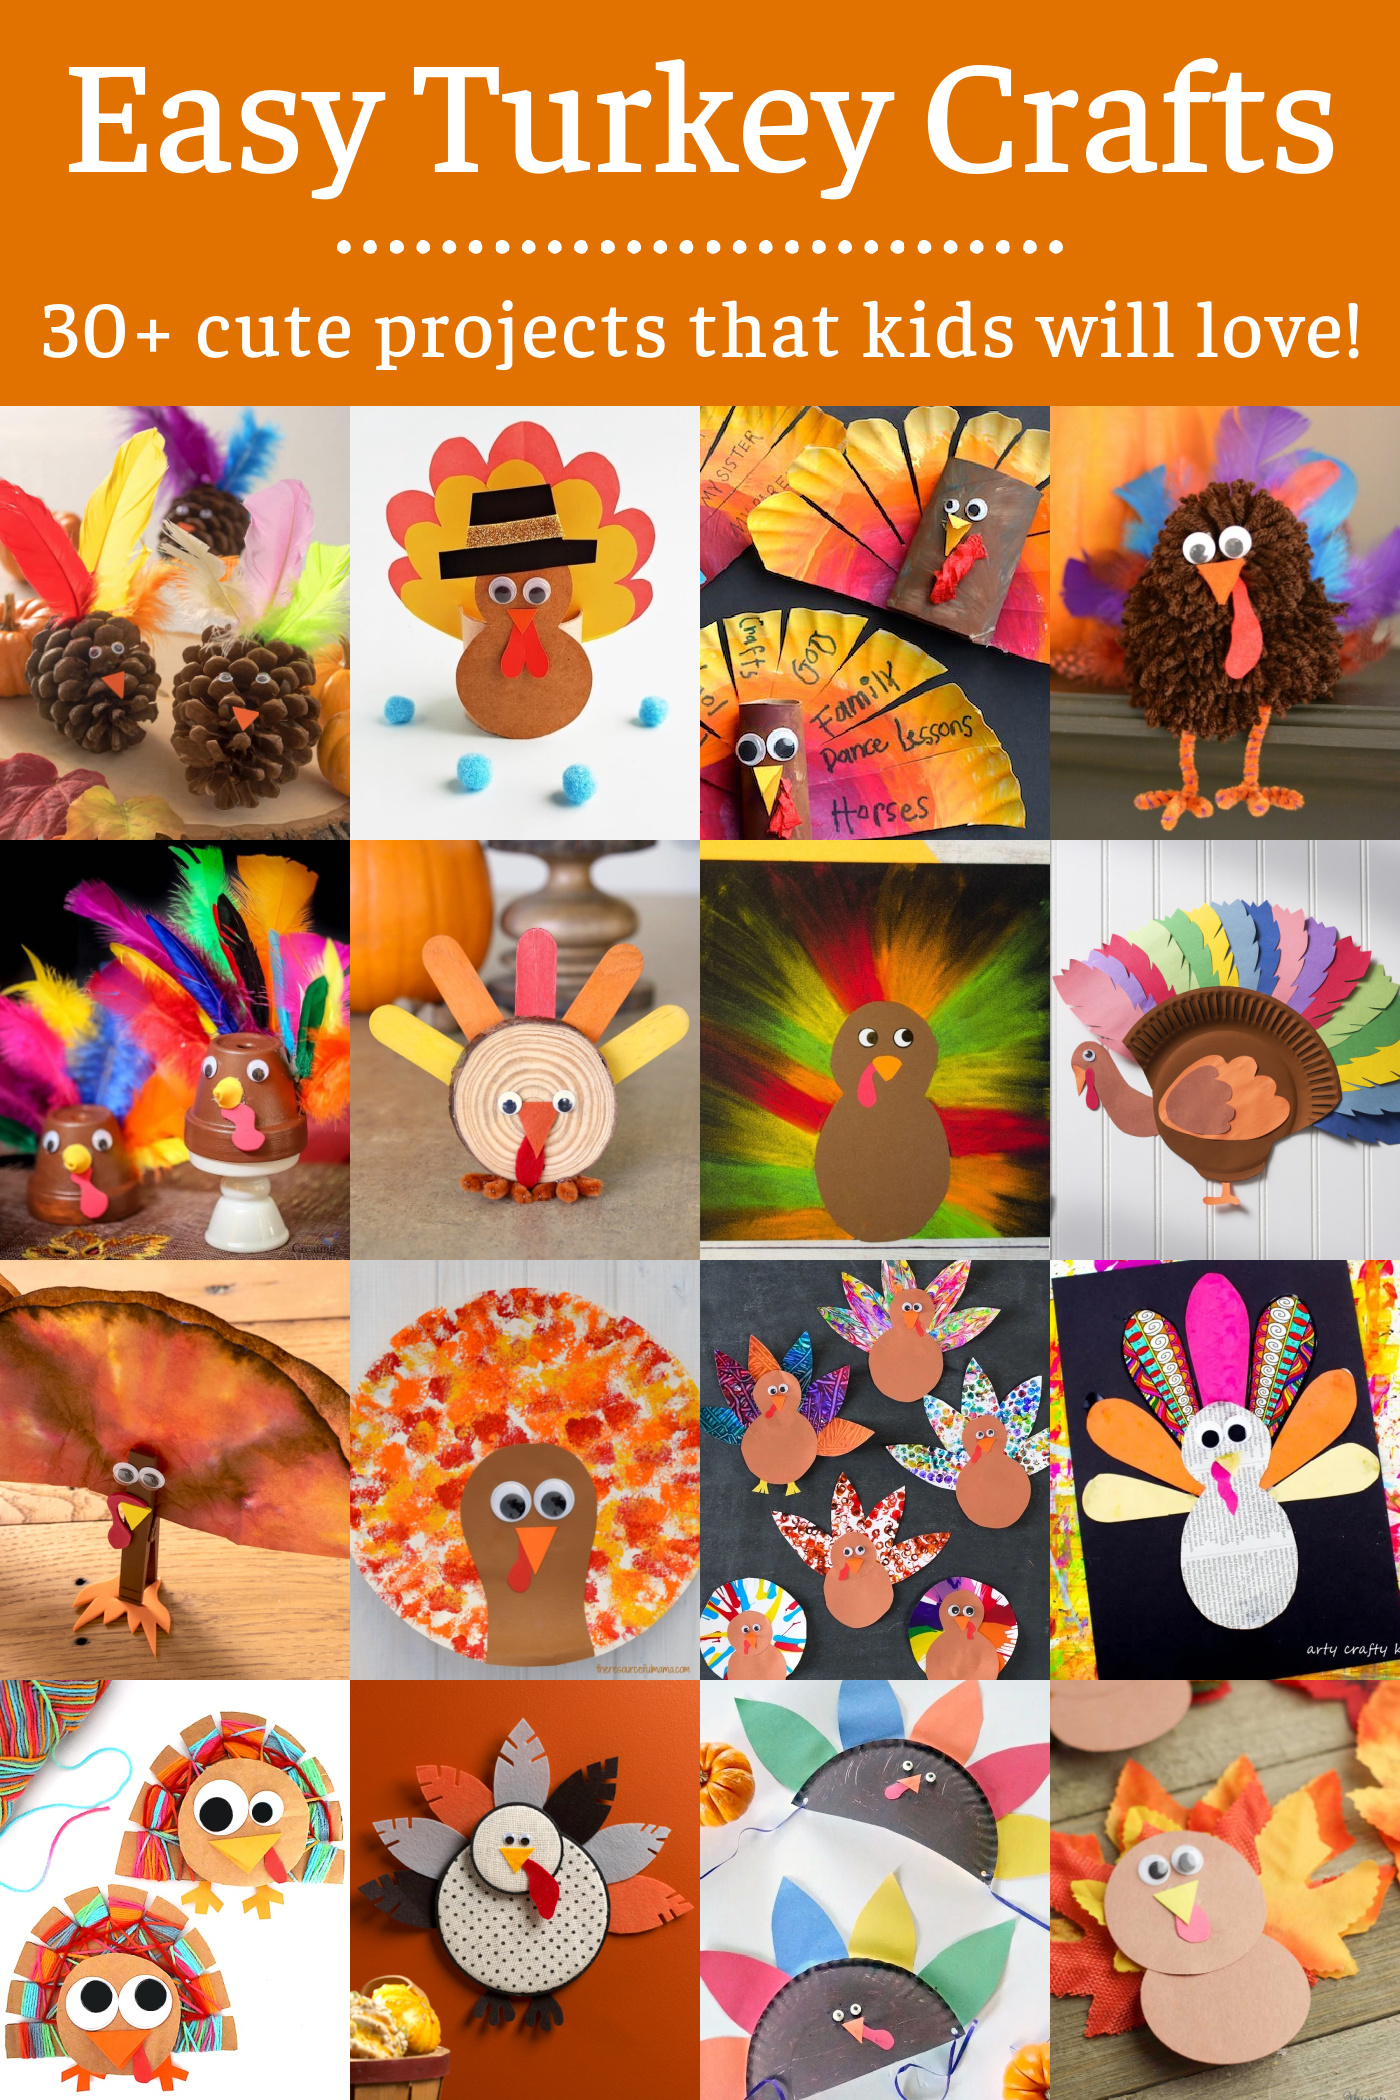 Paper Thanksgiving Turkey Craft - Arty Crafty Kids